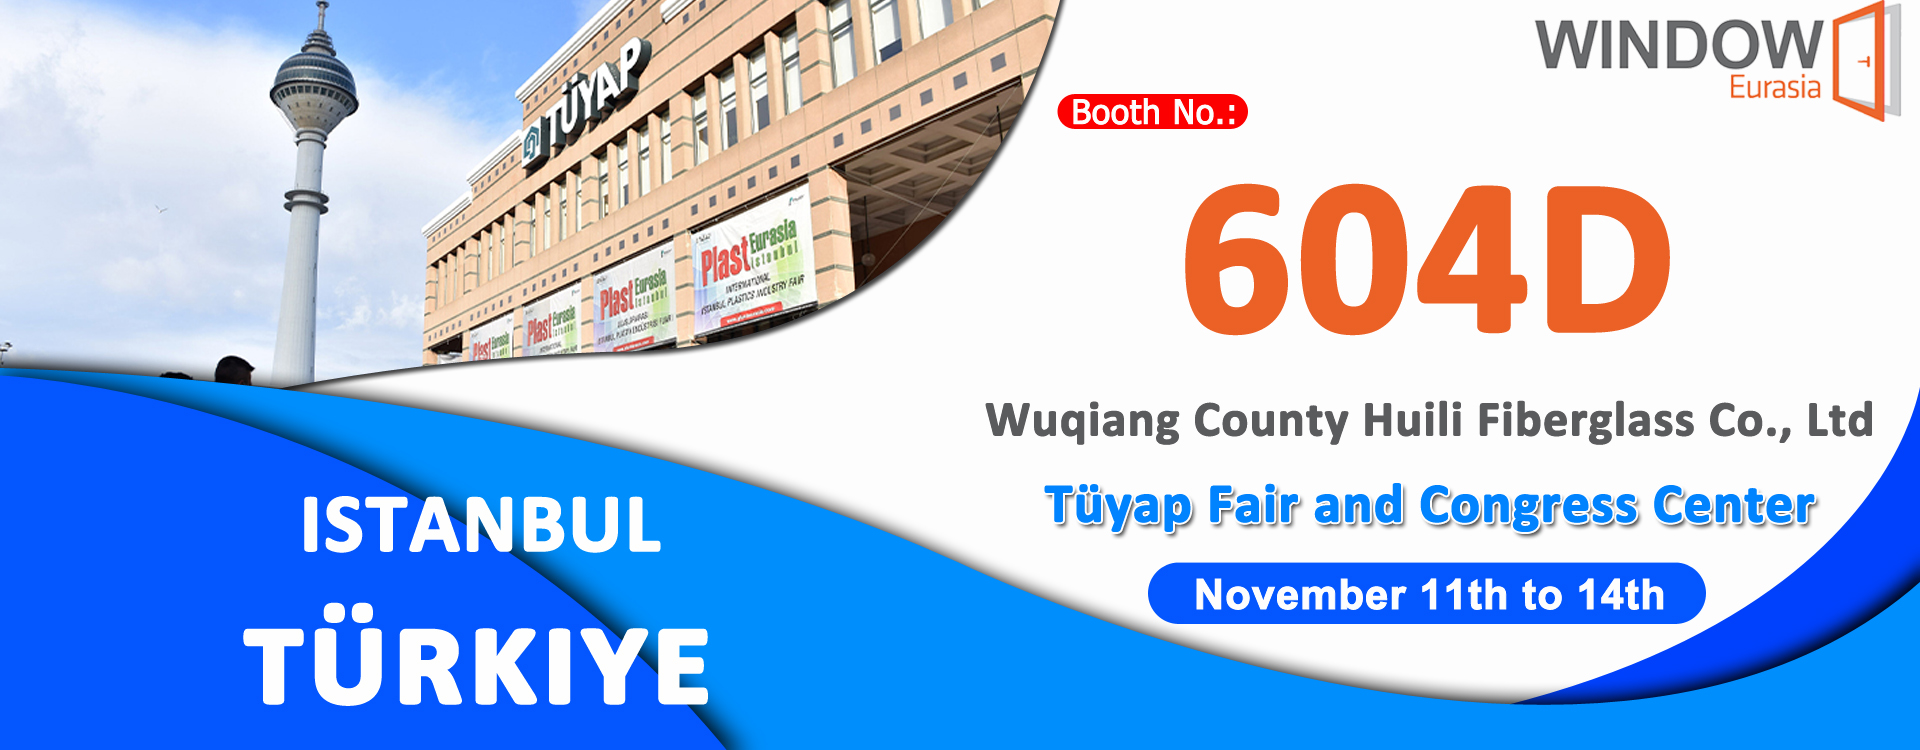 Wuqiang County HuiLi Fiberglass Co., Ltd.